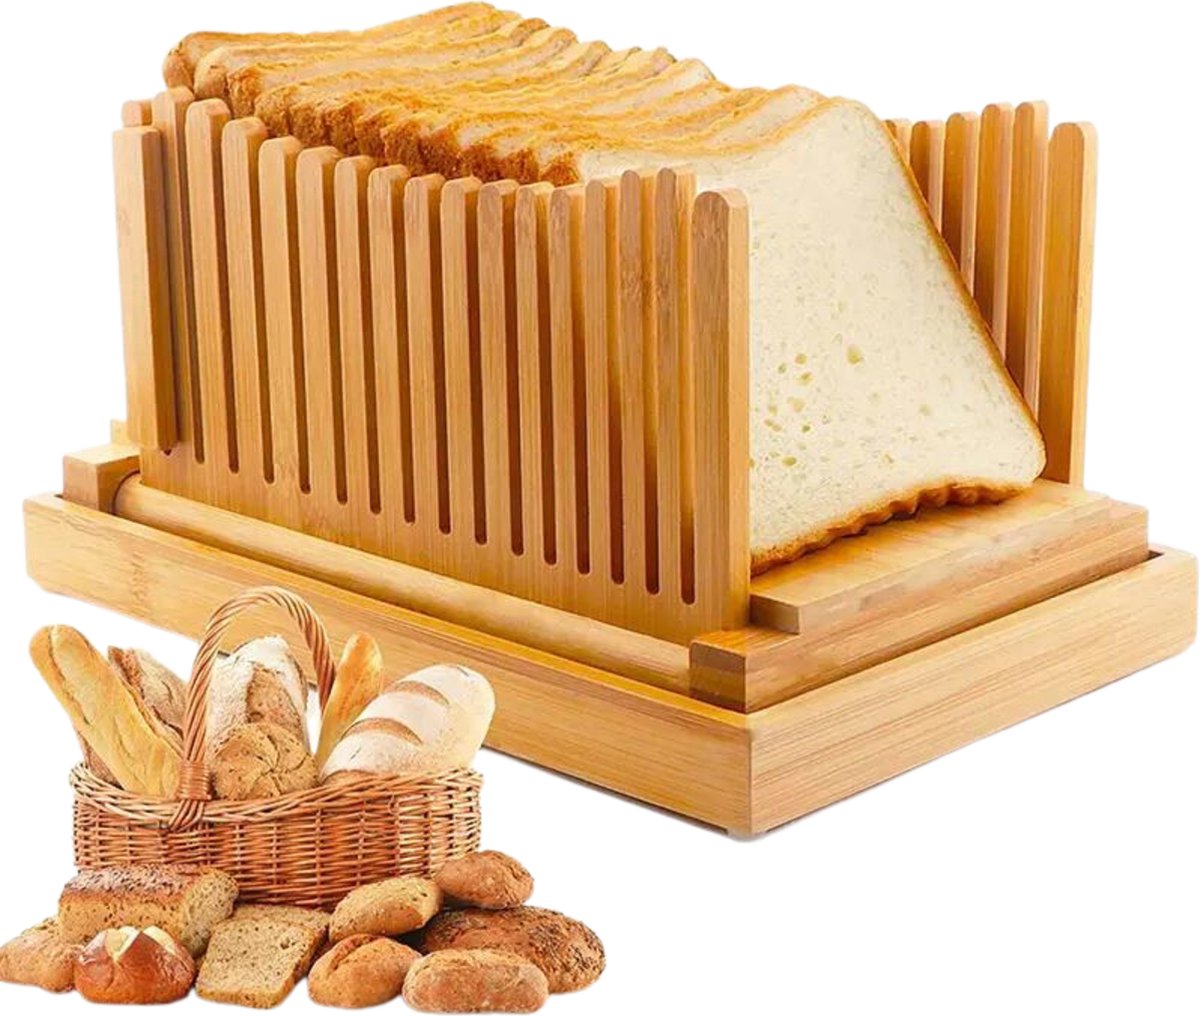 broodsnijder hulpmiddel - tool - bamboe - hout - keuken - ontbijt - brood - tafel